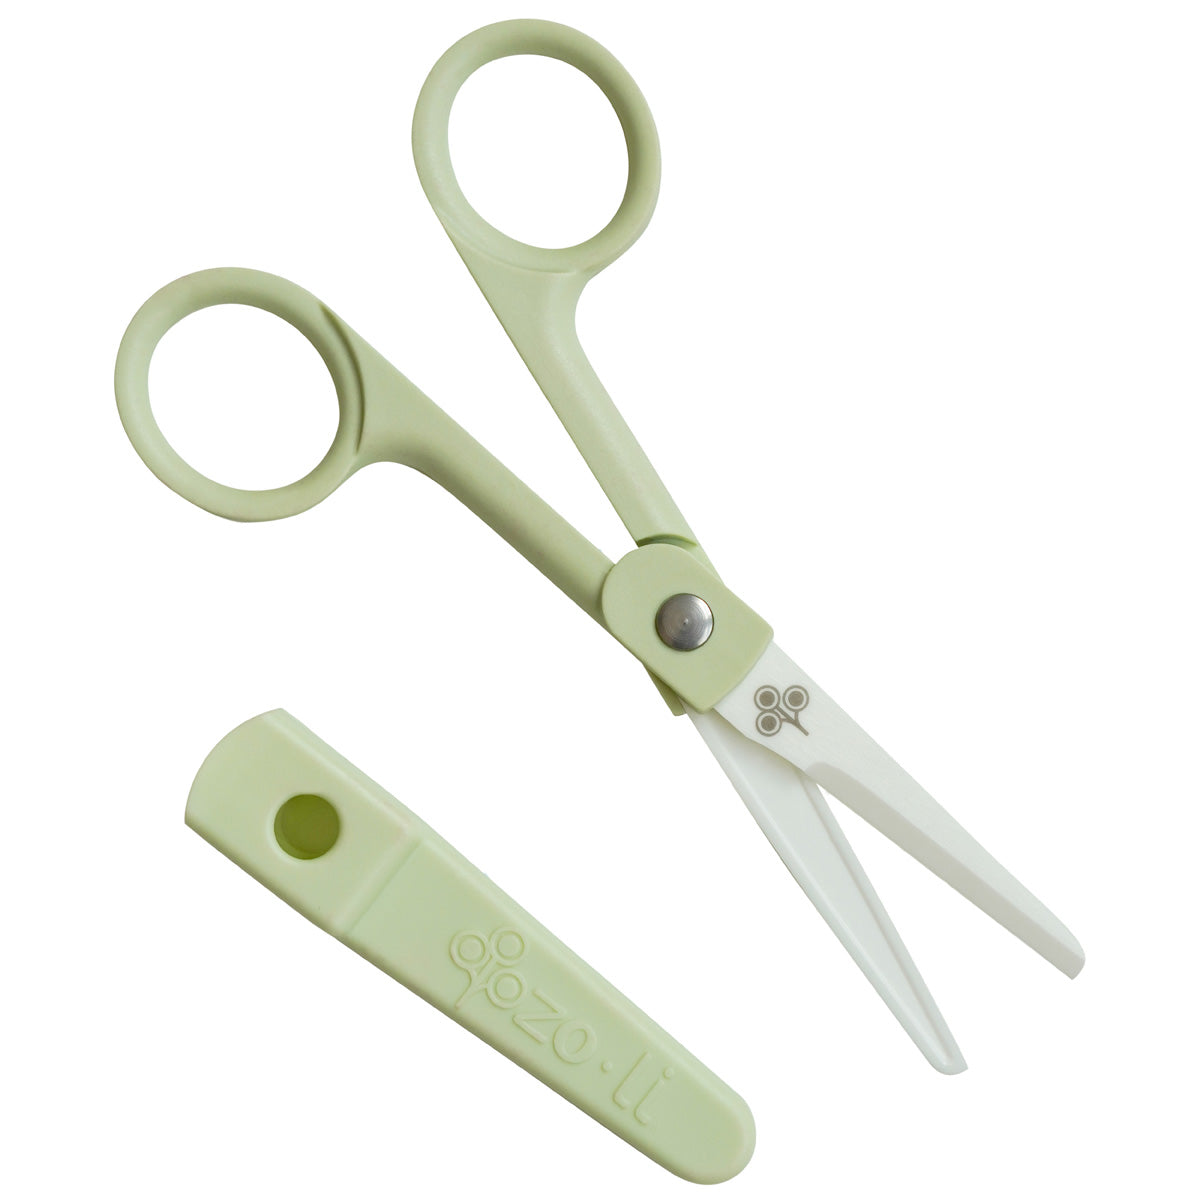 Food Scissors with Sheath